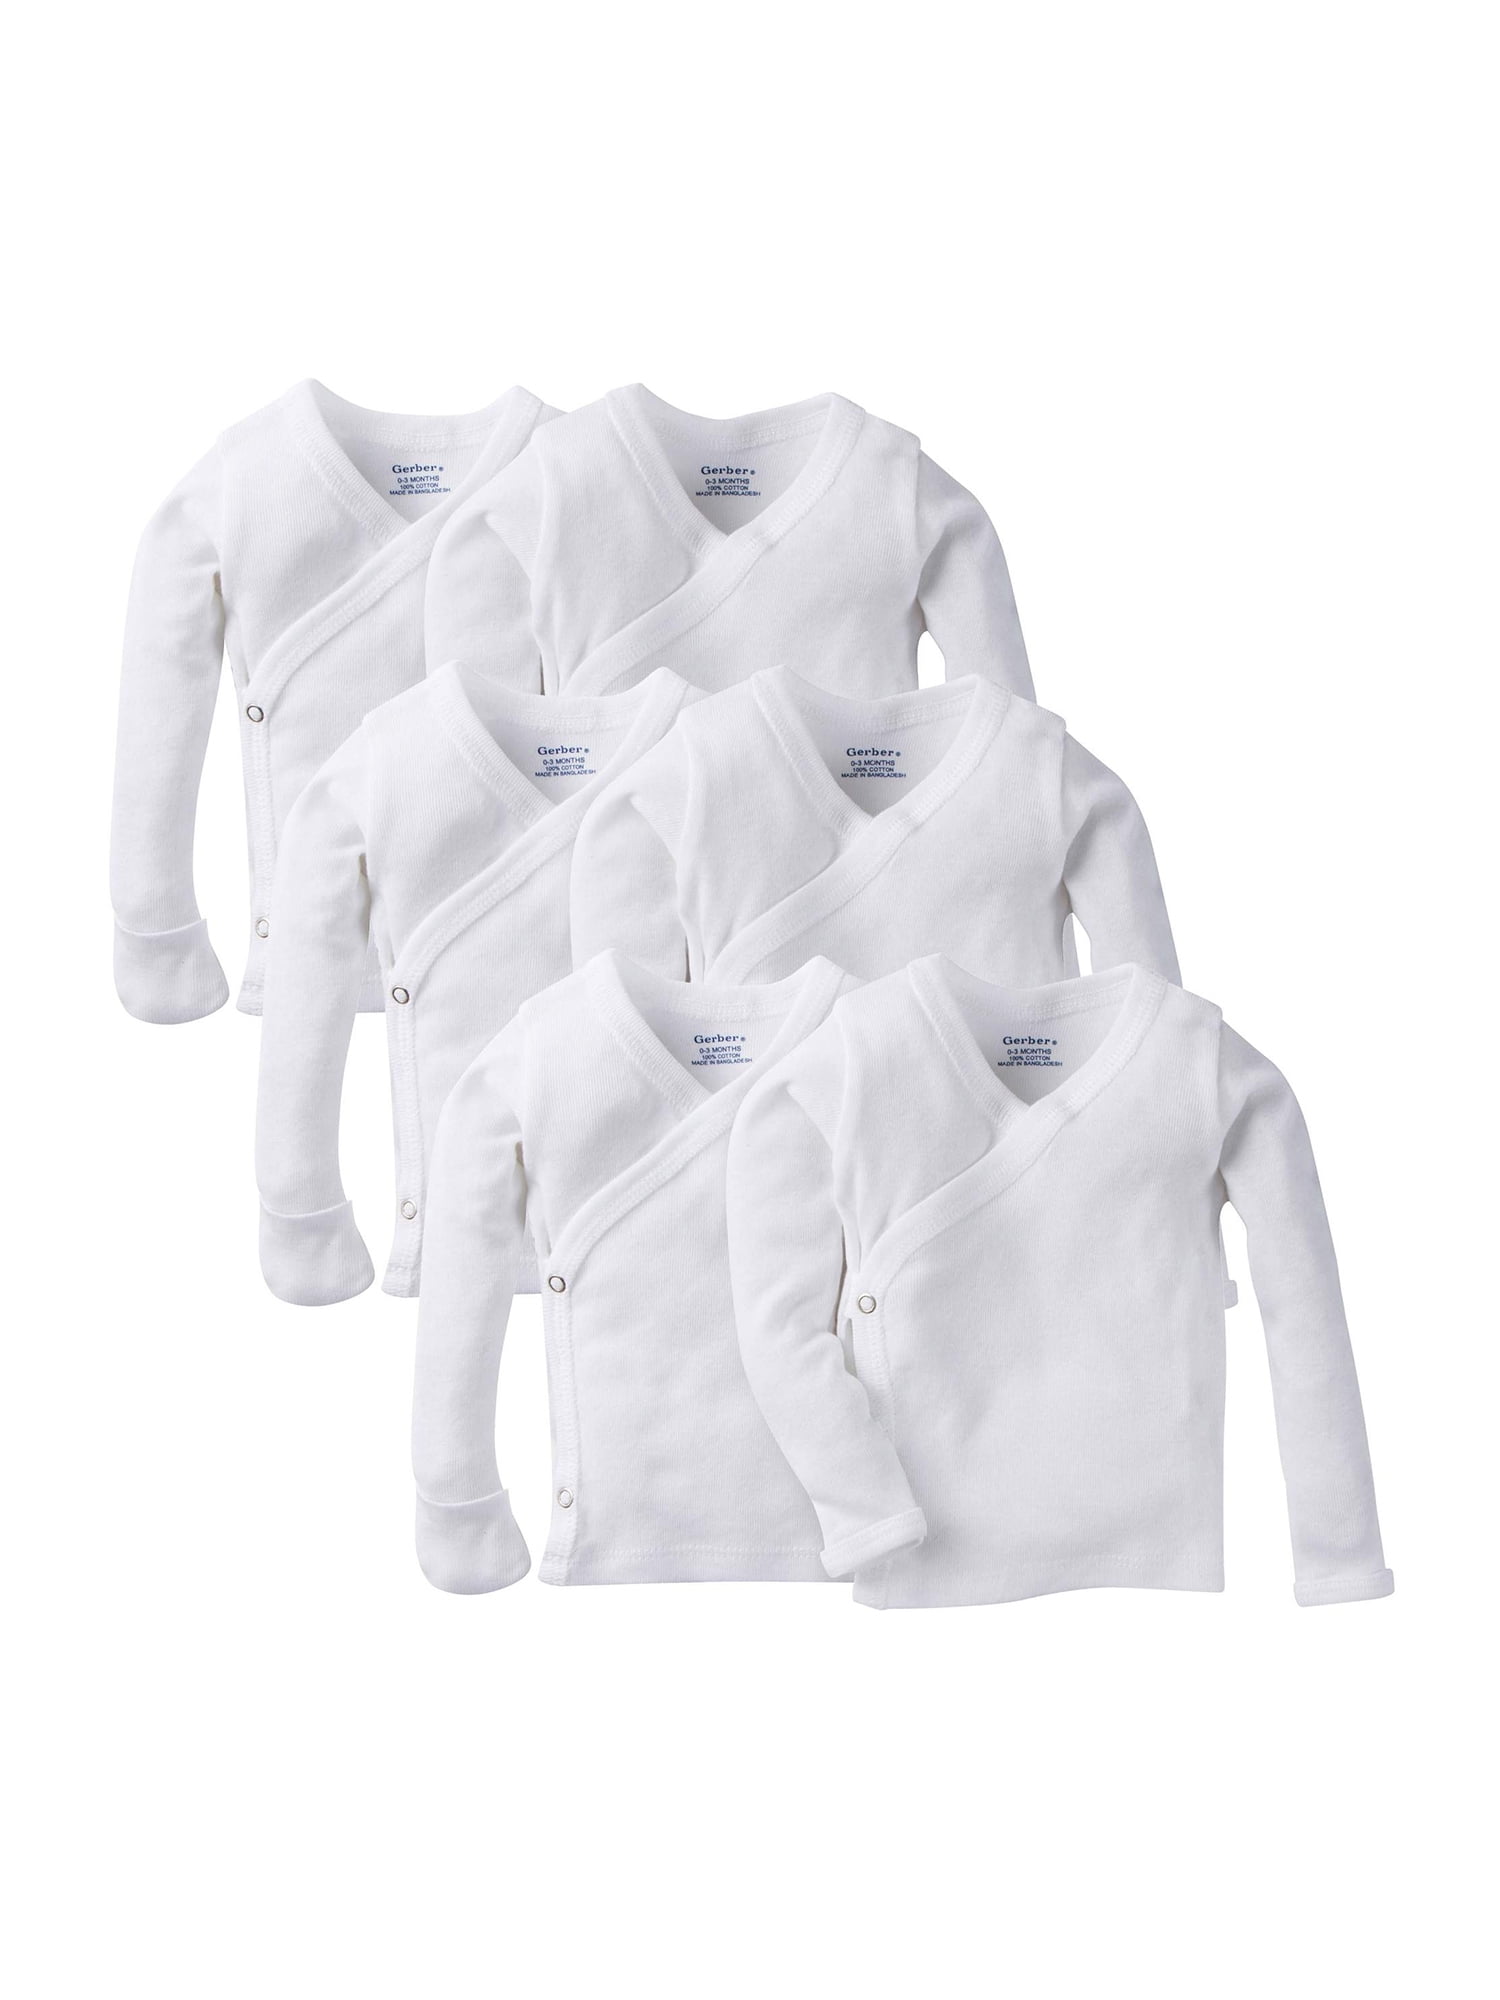 Gerber Baby Boy Or Girl Gender Neutral White Long Sleeve Side Snap Shirt With Mitten Cuffs 6 Pack Walmart Com Walmart Com,Silver Dime Worth